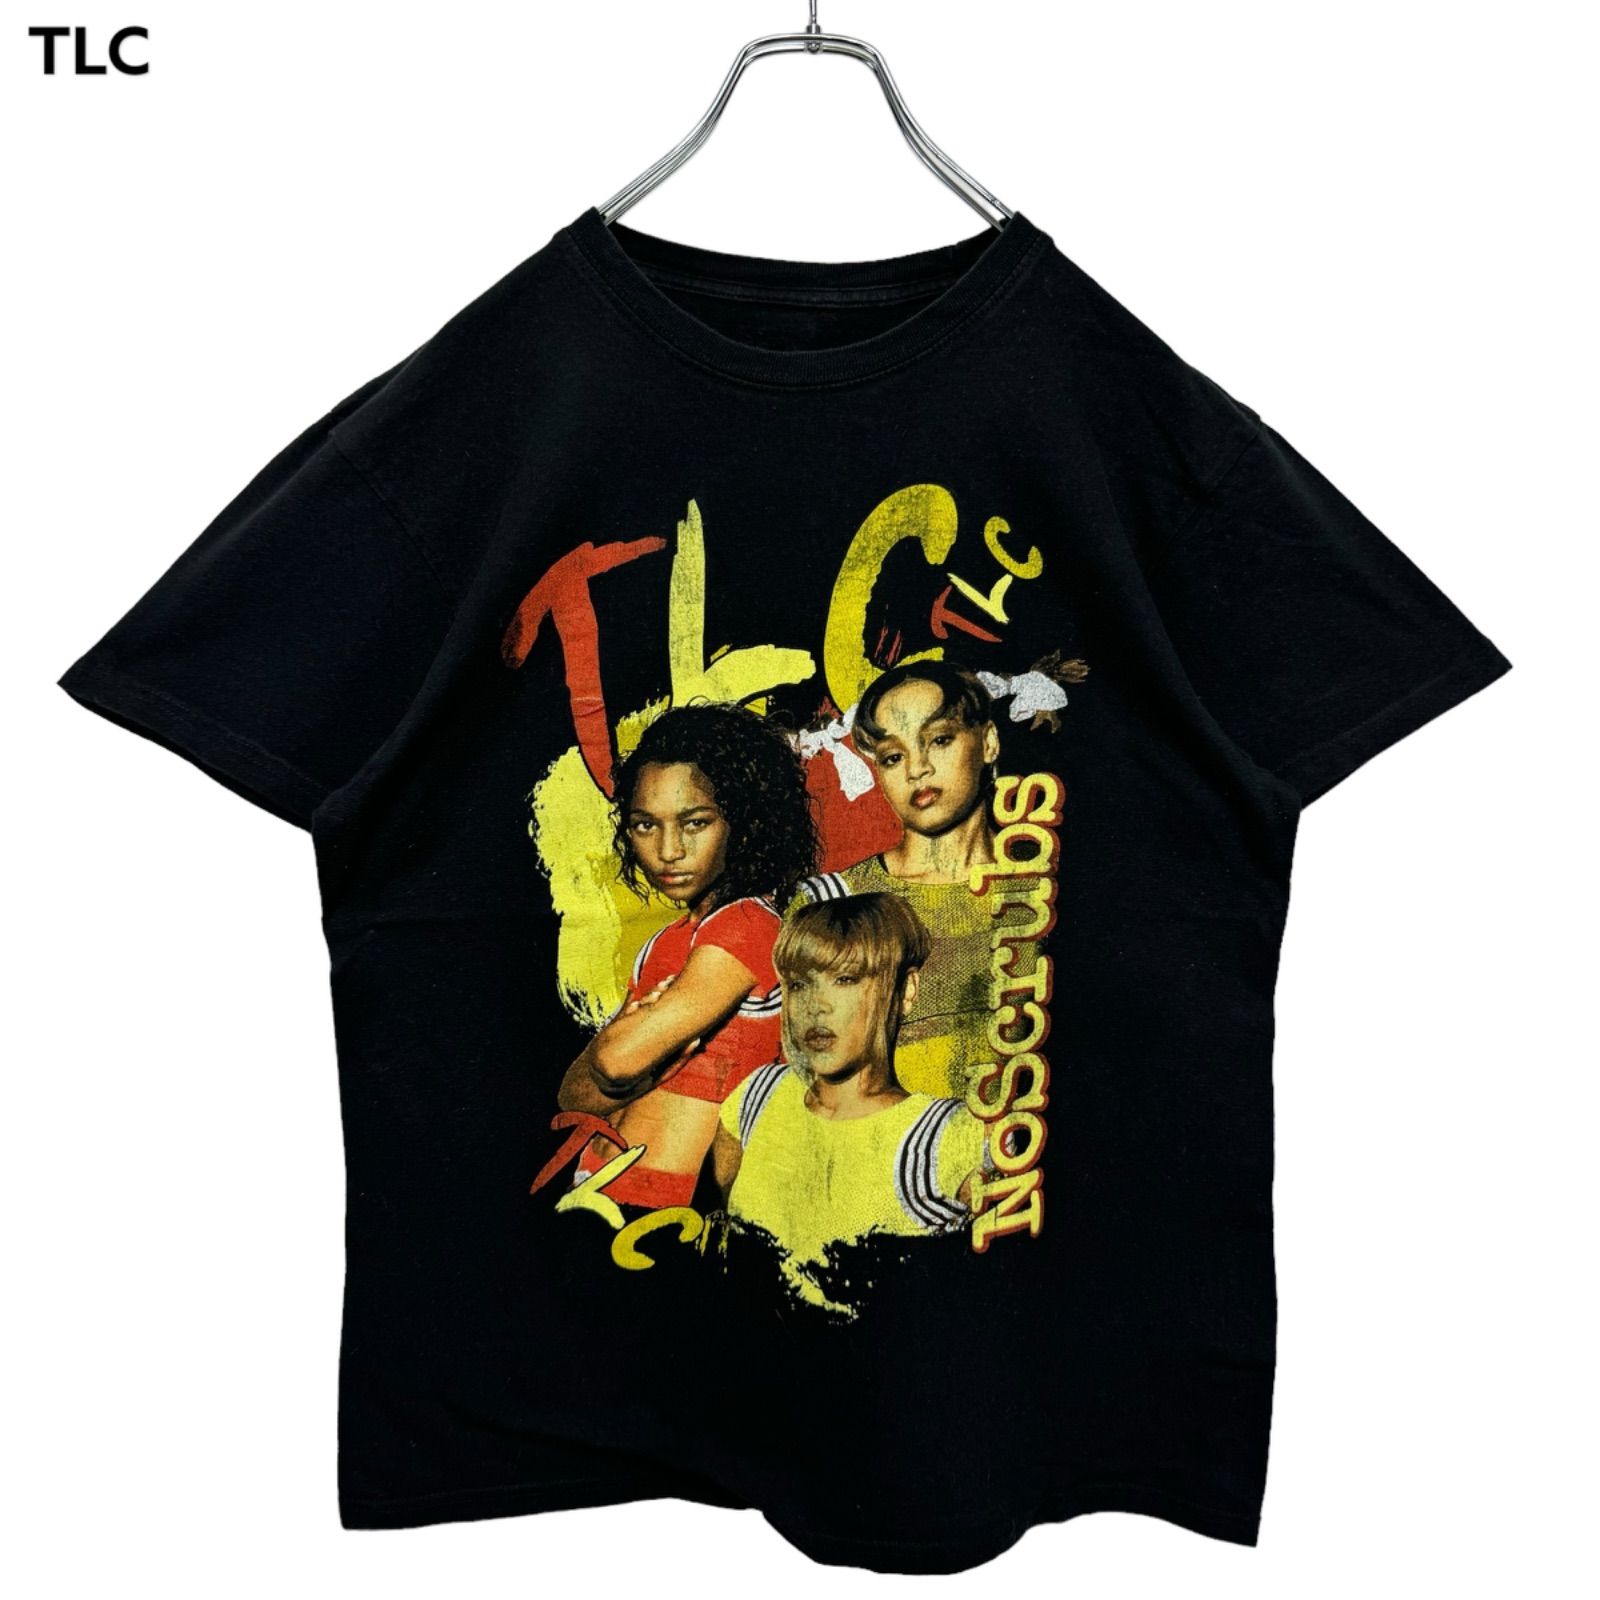 TLC ティーエルシー NoScrubs Tシャツ R&B HIPHOP ヒップホップ バンT バンドT 音楽T ミュージックT 古着